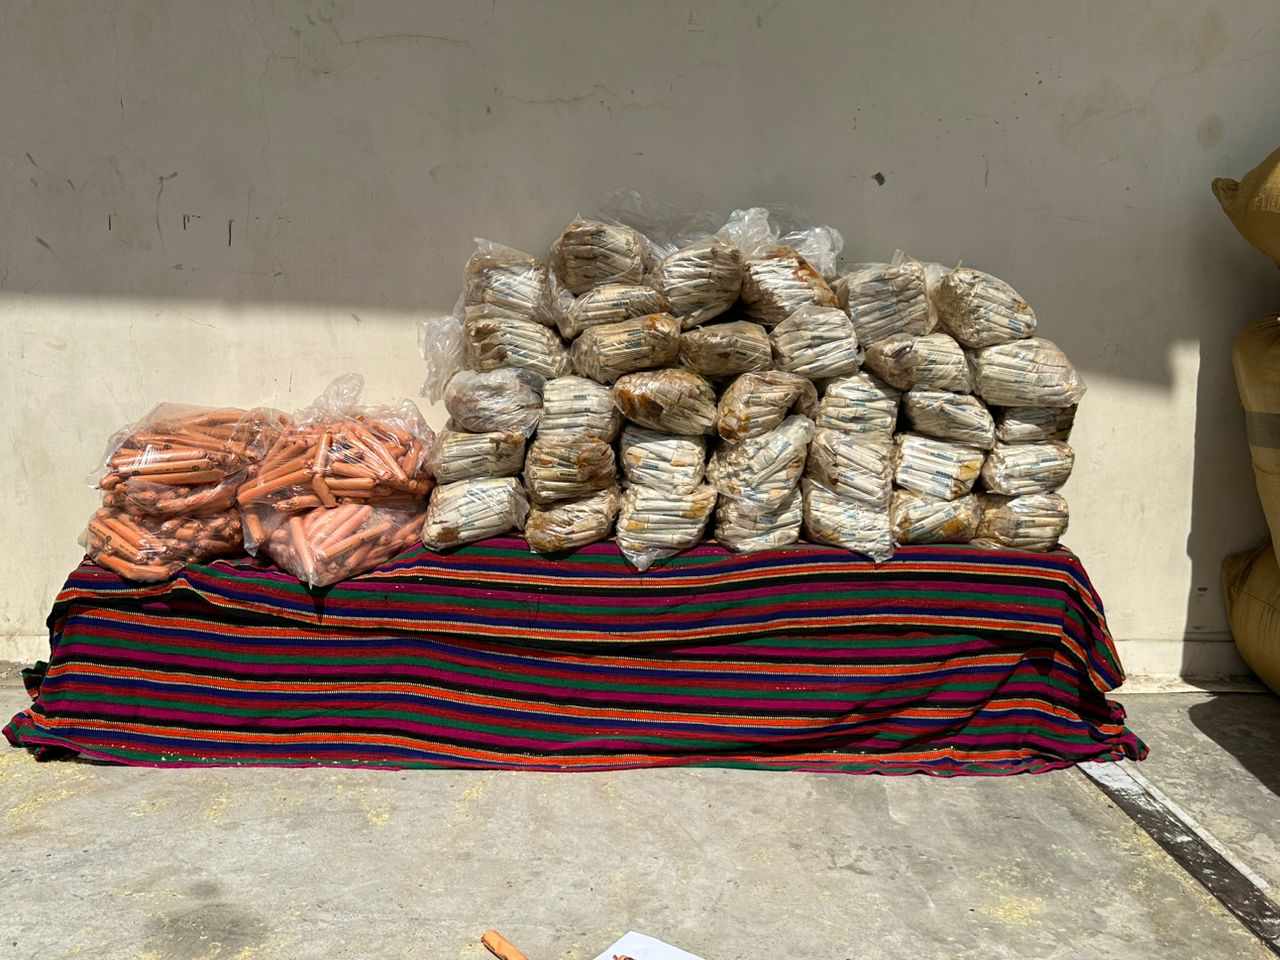 Smuggled from Pakistan, explosives seized at Torkham